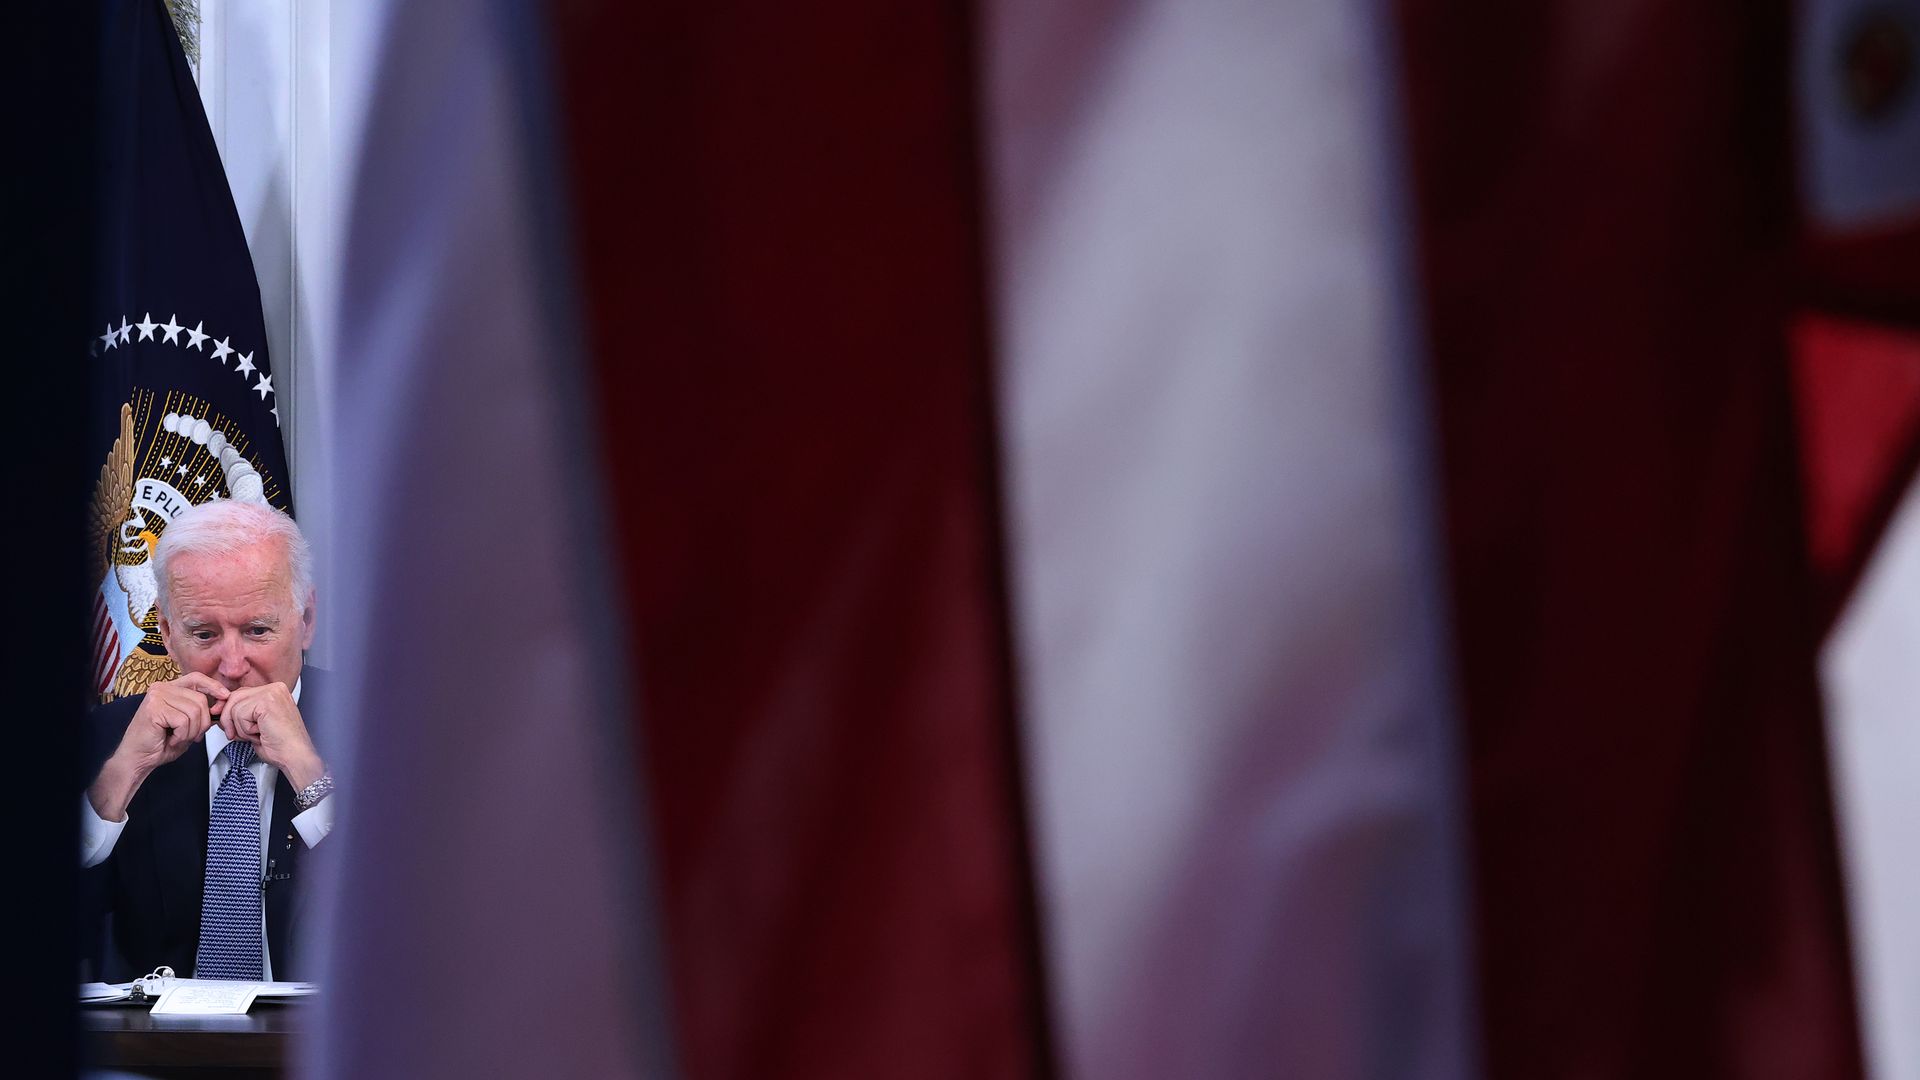 President Biden is seen between presidential and American flags.